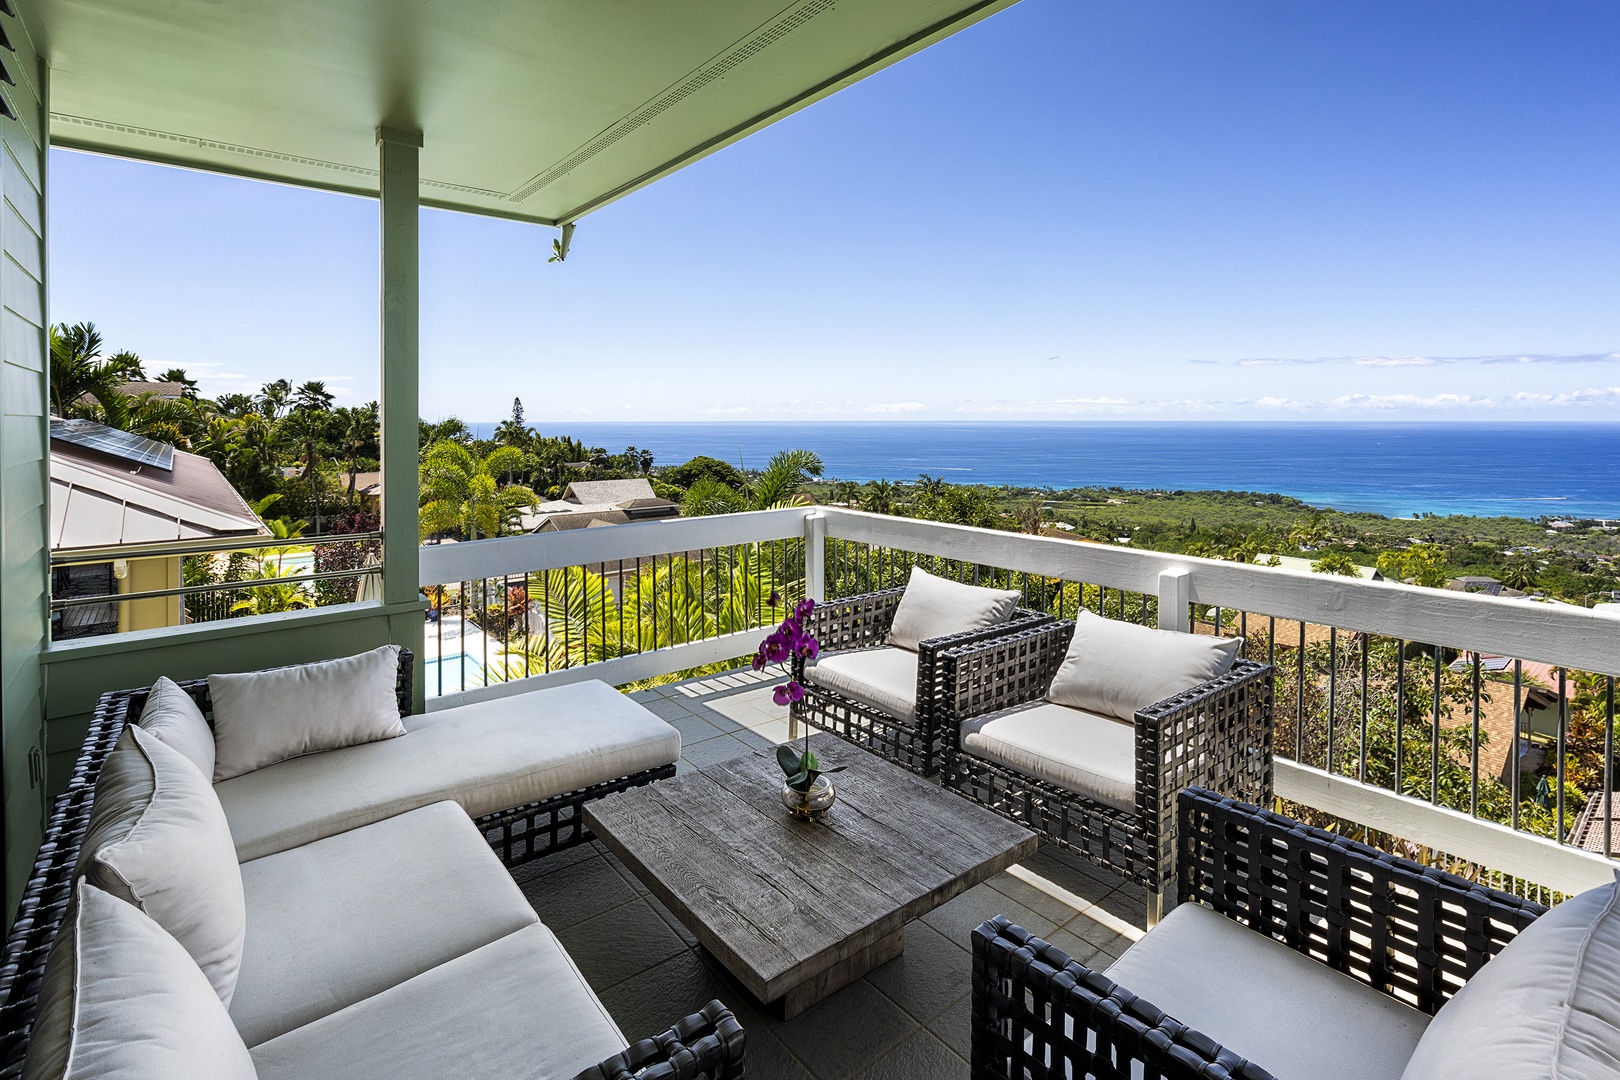 Kailua Kona Vacation Rentals, Ho'o Maluhia - Outdoor comfortable seating